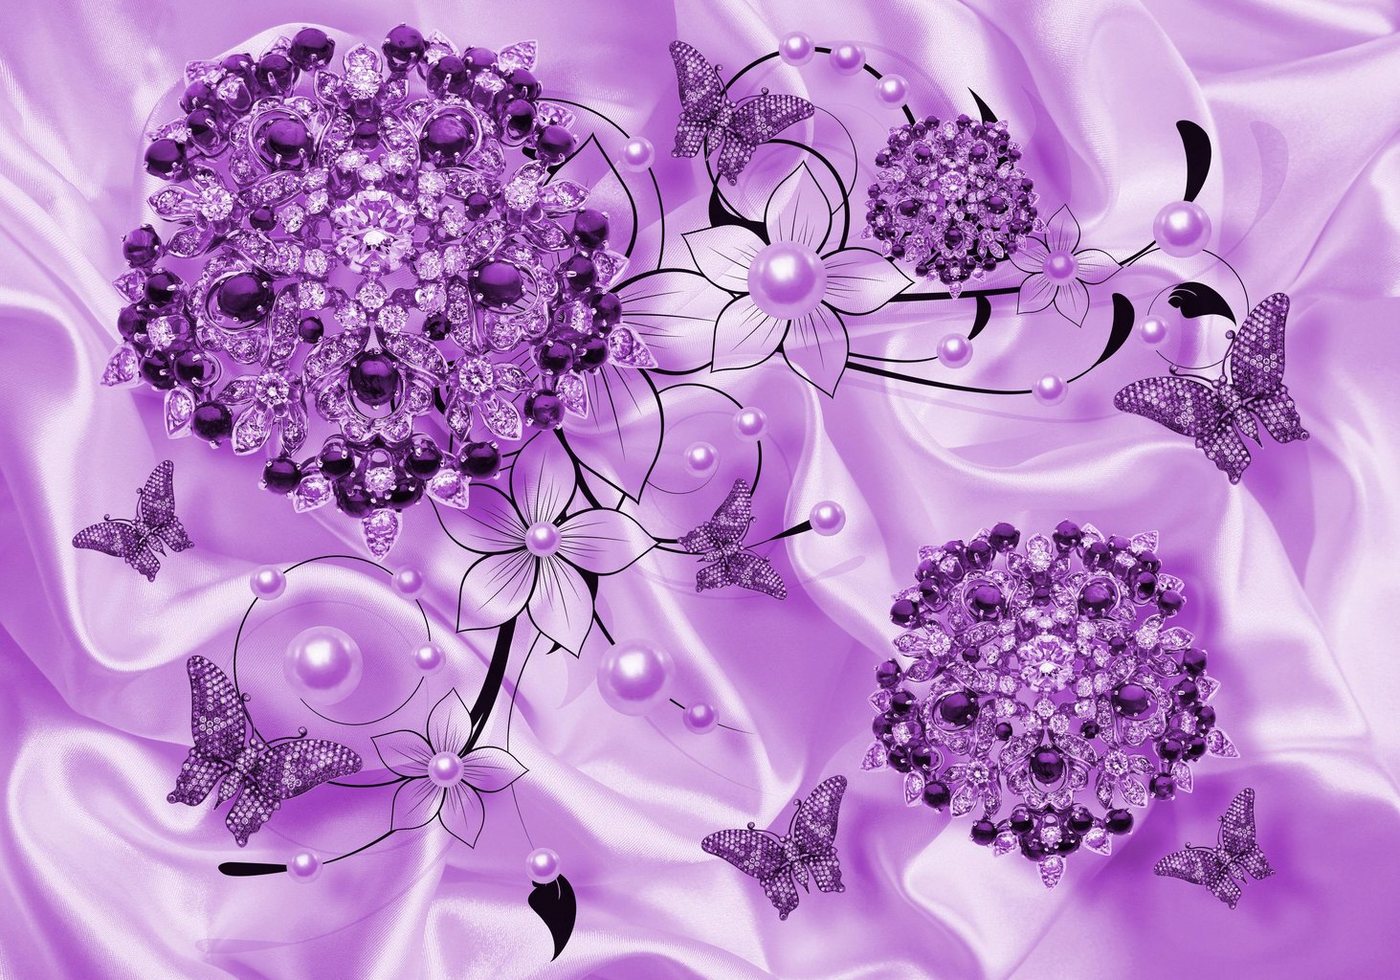 wandmotiv24 Fototapete violette Blumen, strukturiert, Wandtapete, Motivtapete, matt, Vinyltapete, selbstklebend von wandmotiv24